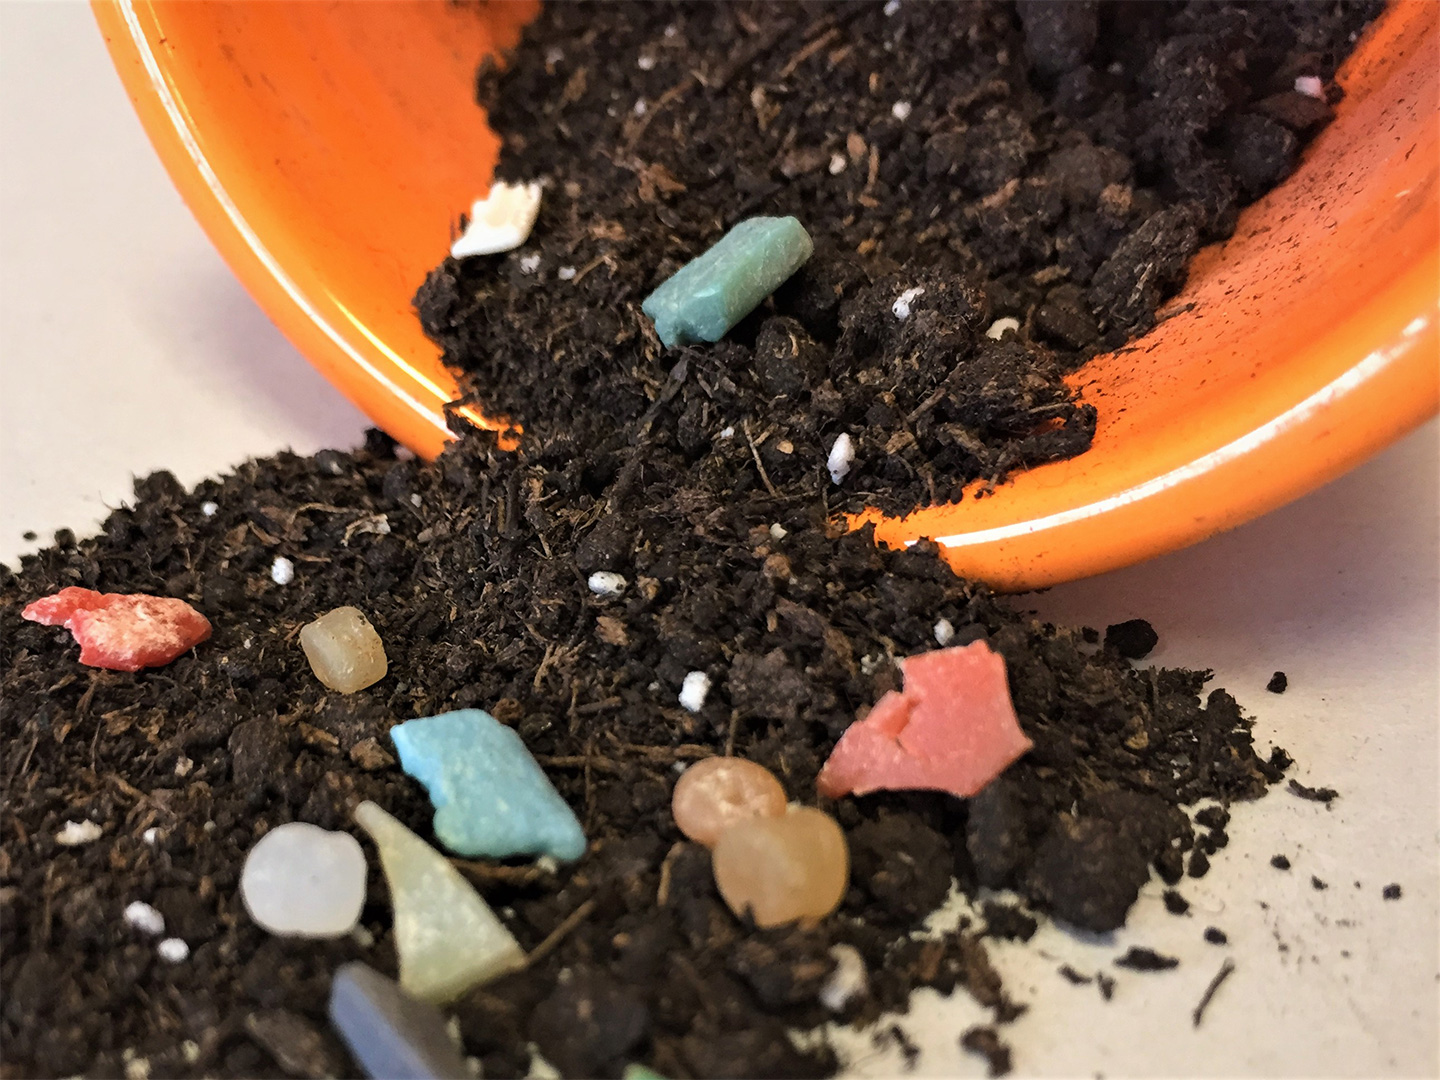 Microplastics in soil.